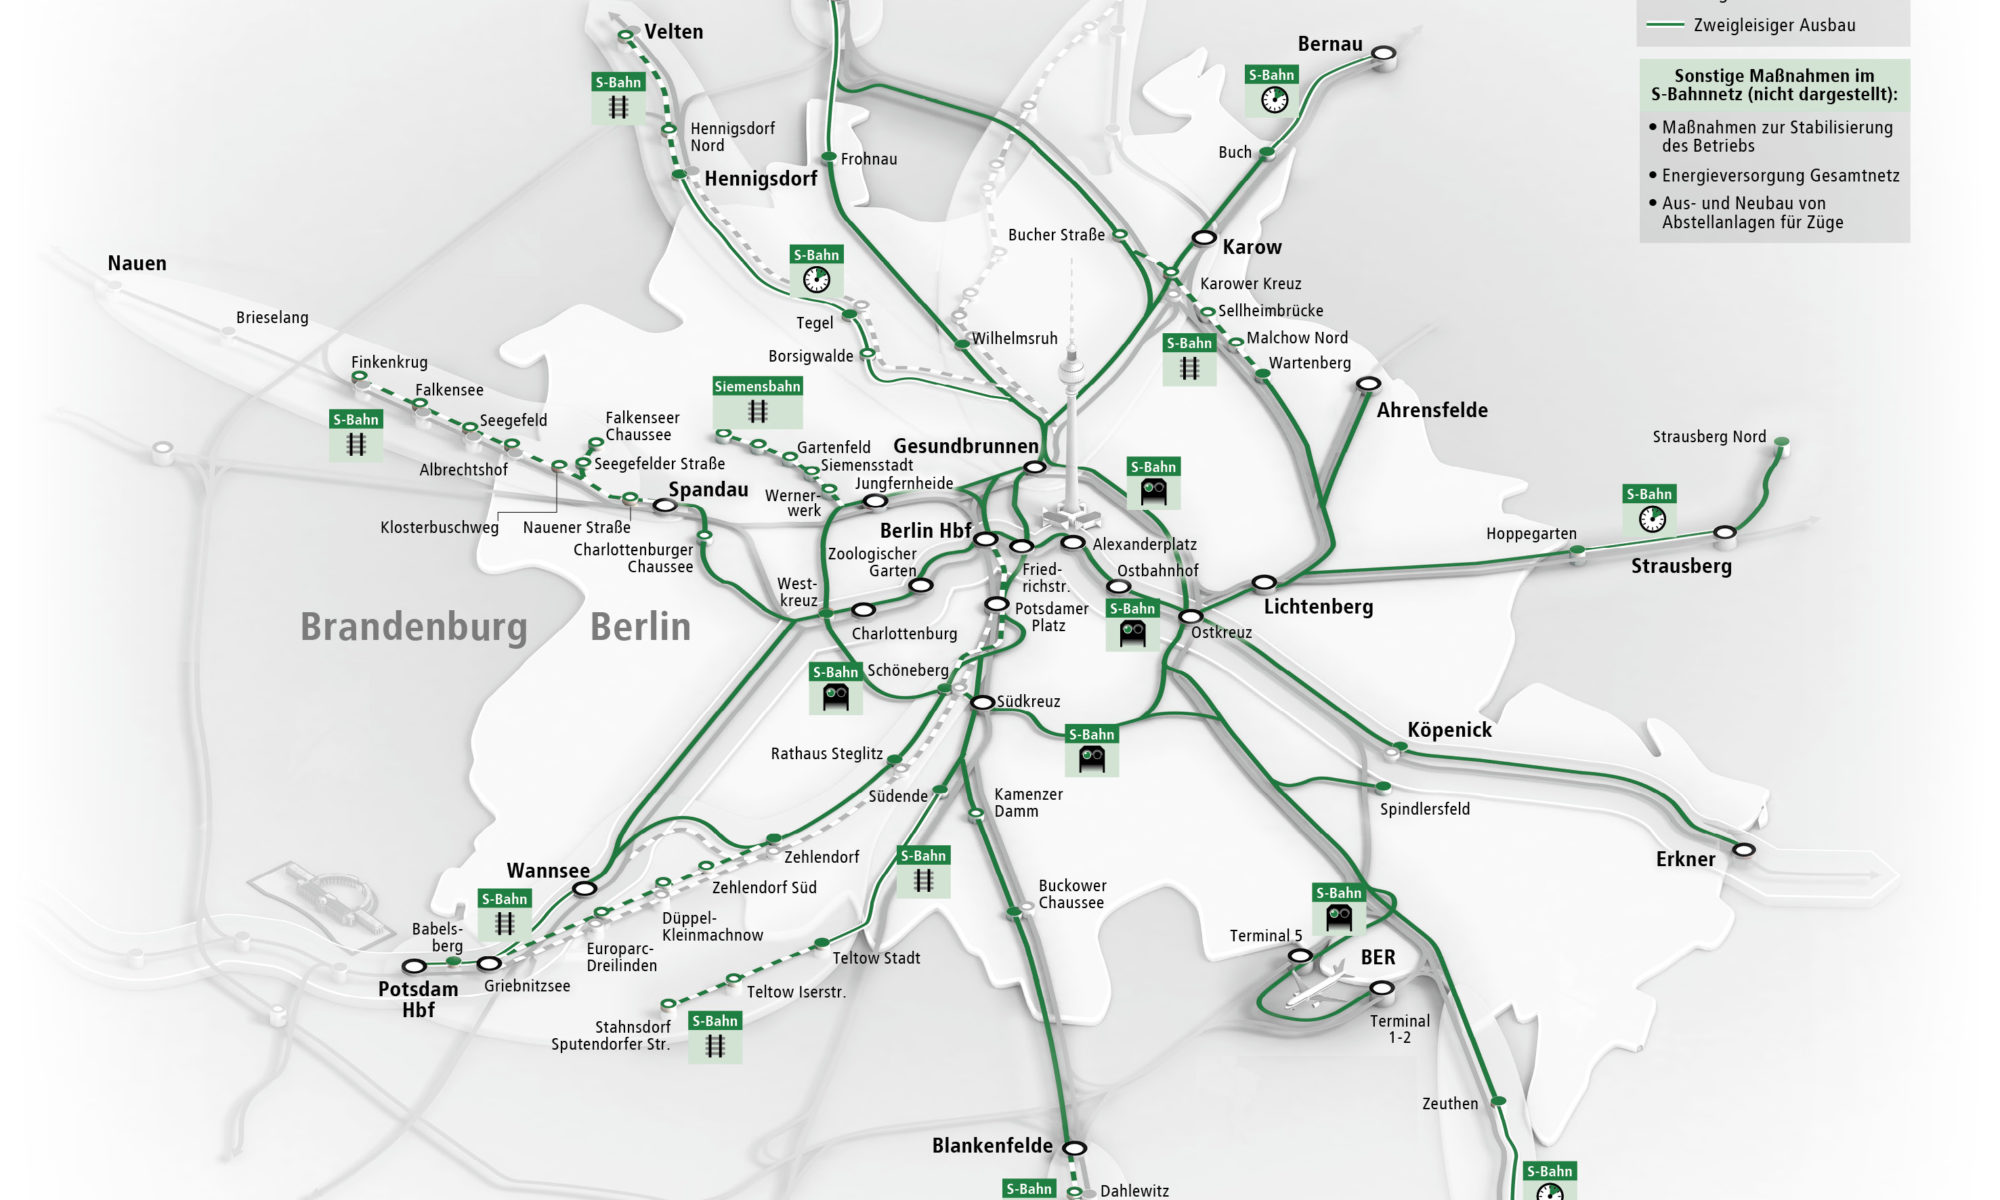 i2030-S-Bahn-Karte-RGB